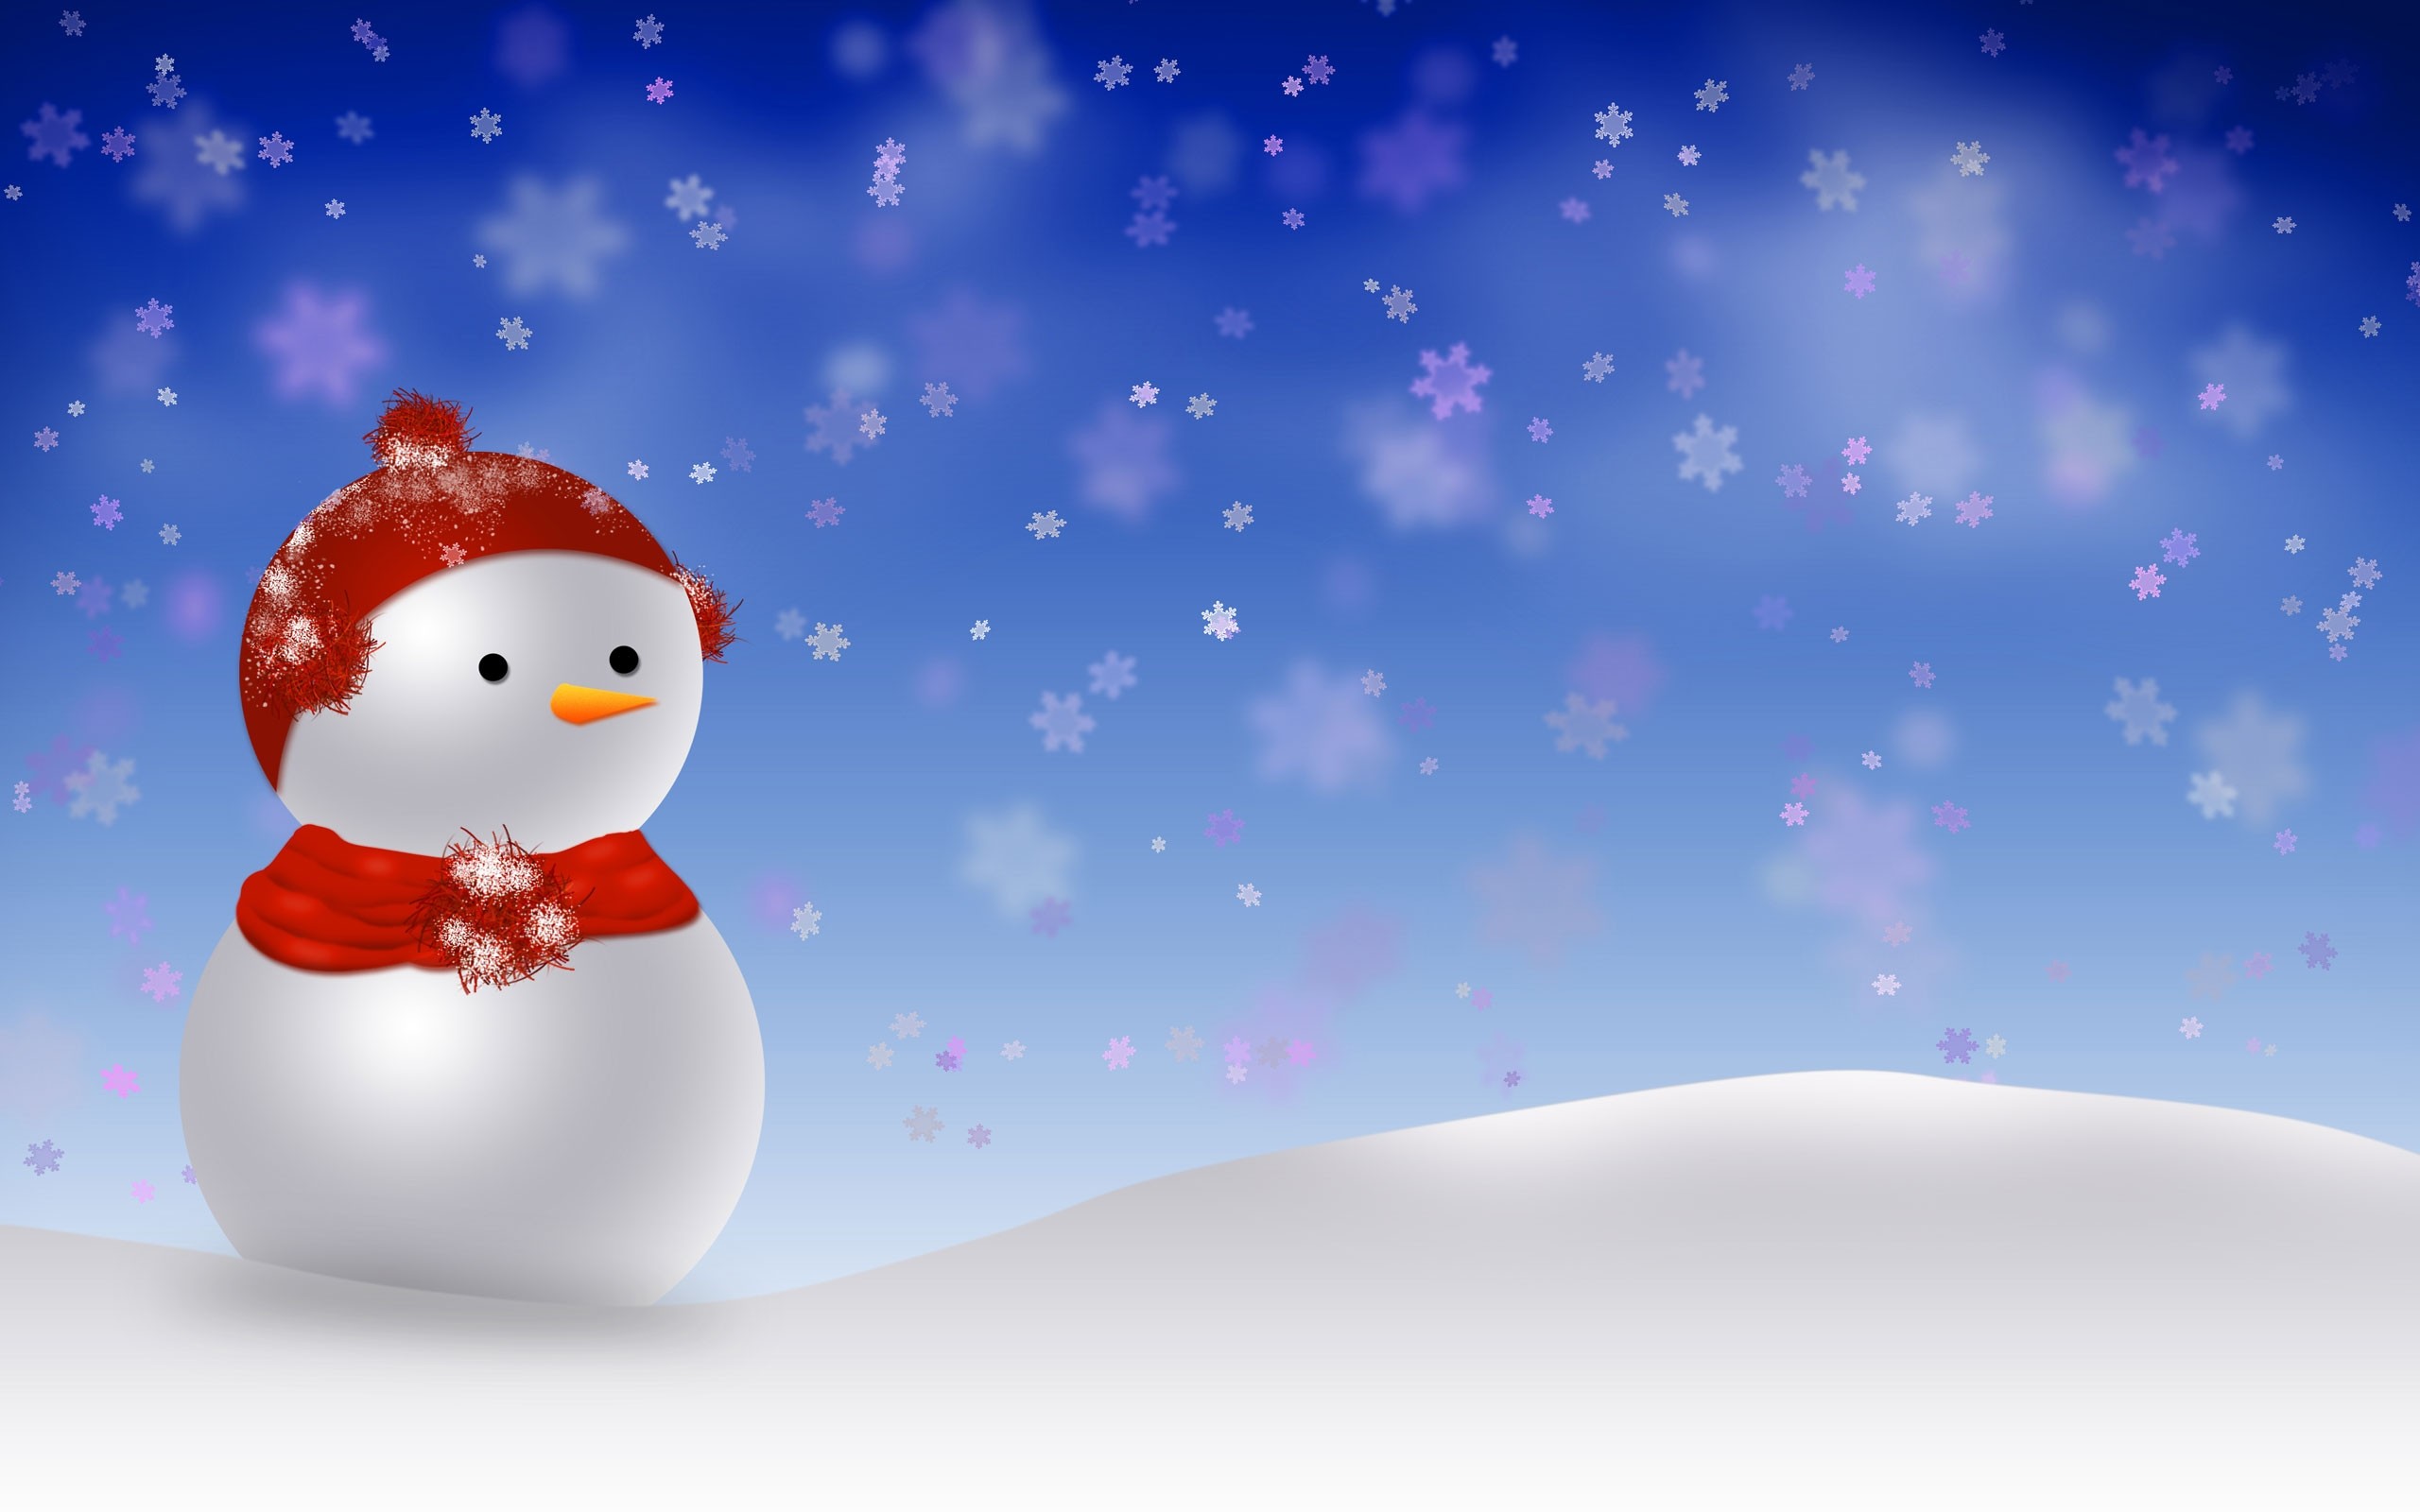 Free Animated Christmas Wallpaper for Desktop (9)